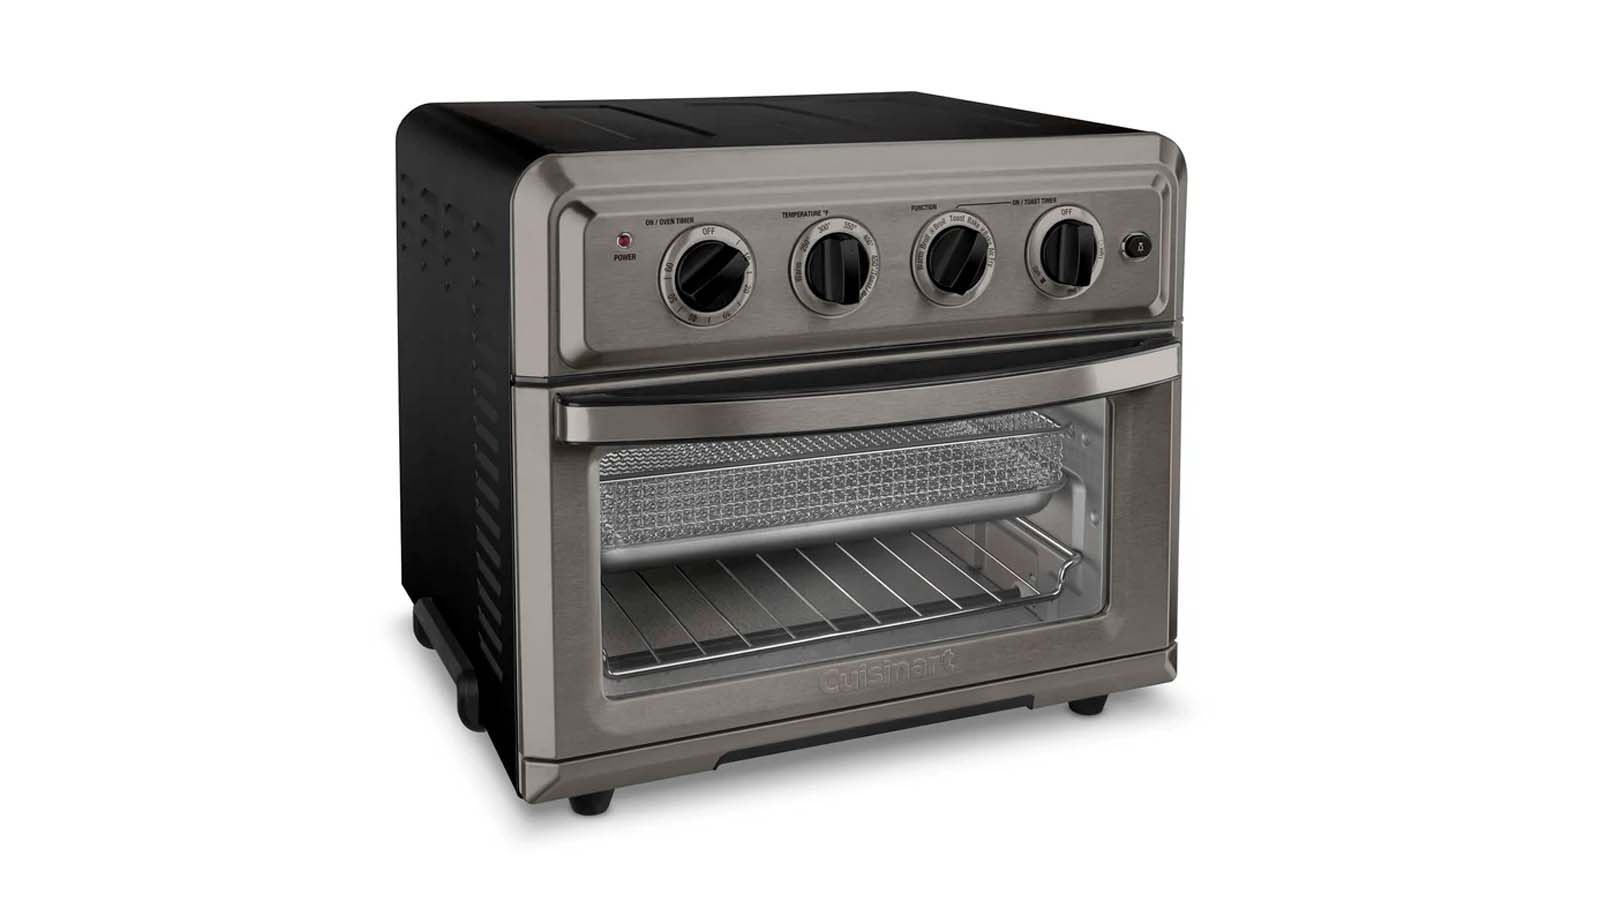 https://media.cnn.com/api/v1/images/stellar/prod/221103133200-cuisinart-air-fryer-toaster-oven-wayfair-cnnu.jpg?c=original